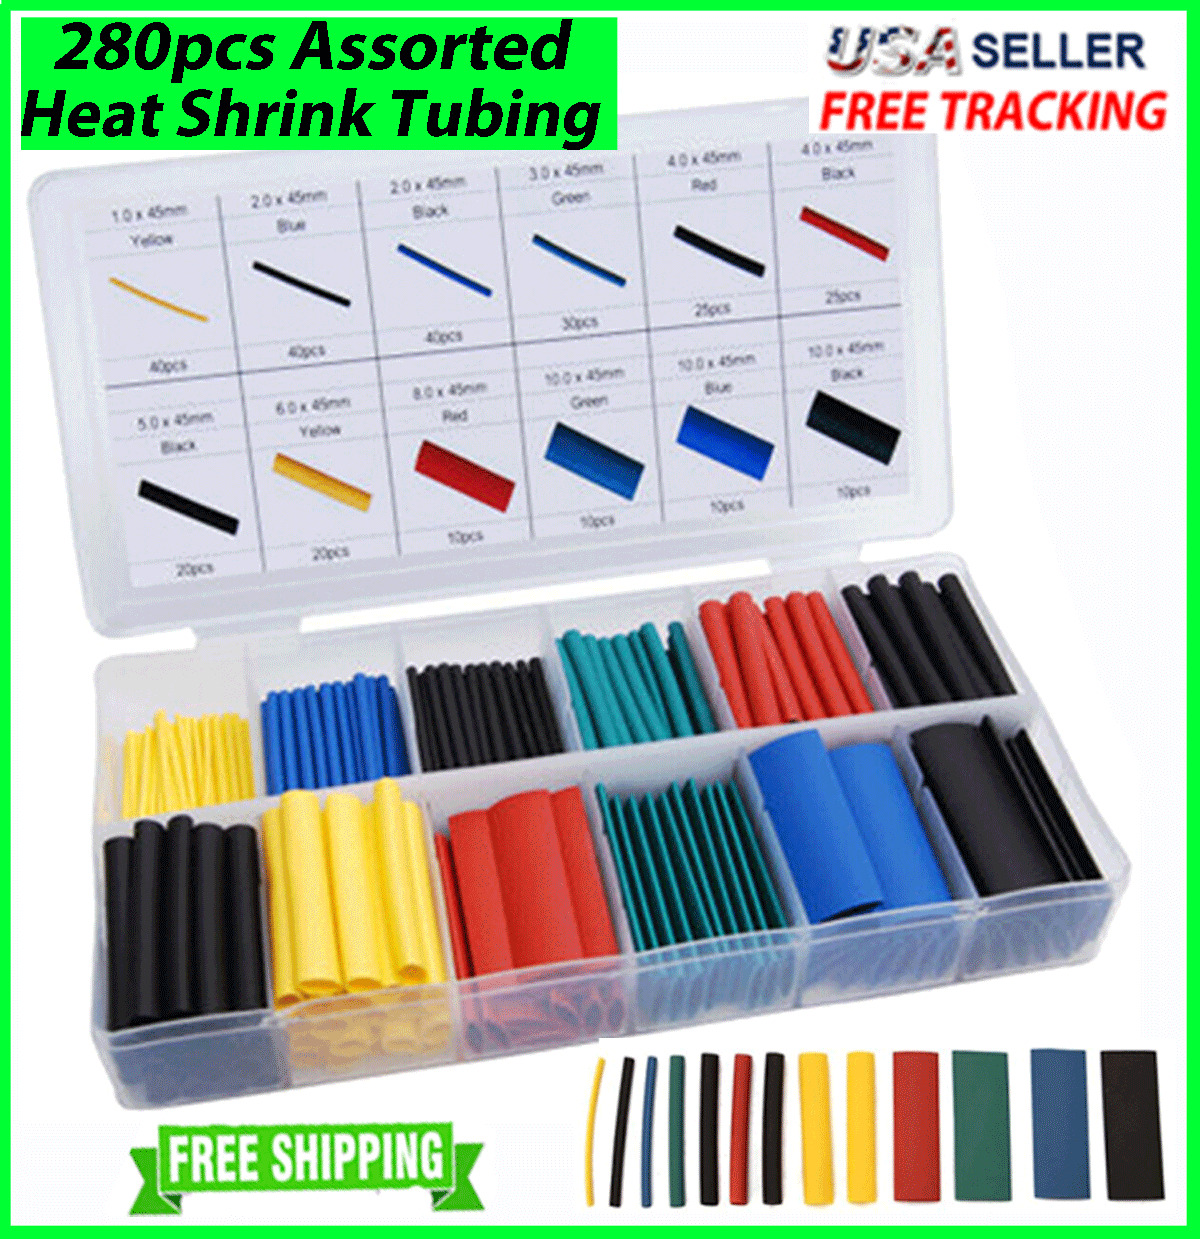 280pcs HEAT SHRINK TUBING Sleeve Cable Wire Wrap Tube 2:1 Assortment Kit Box Set